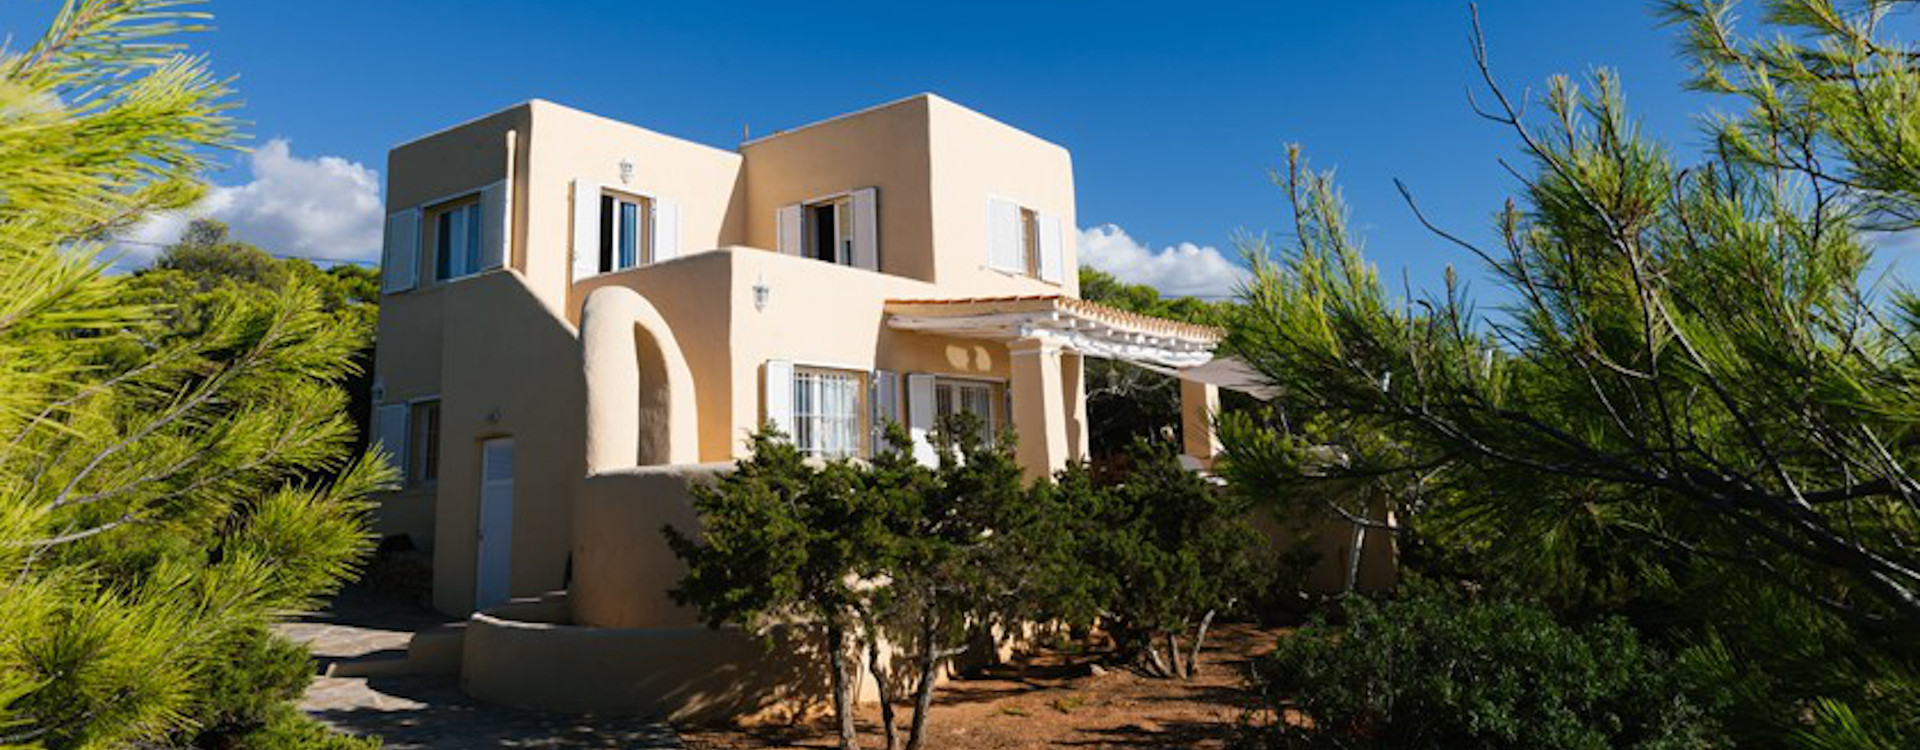 Villa Mar Azul te huur op ibiza - huis 